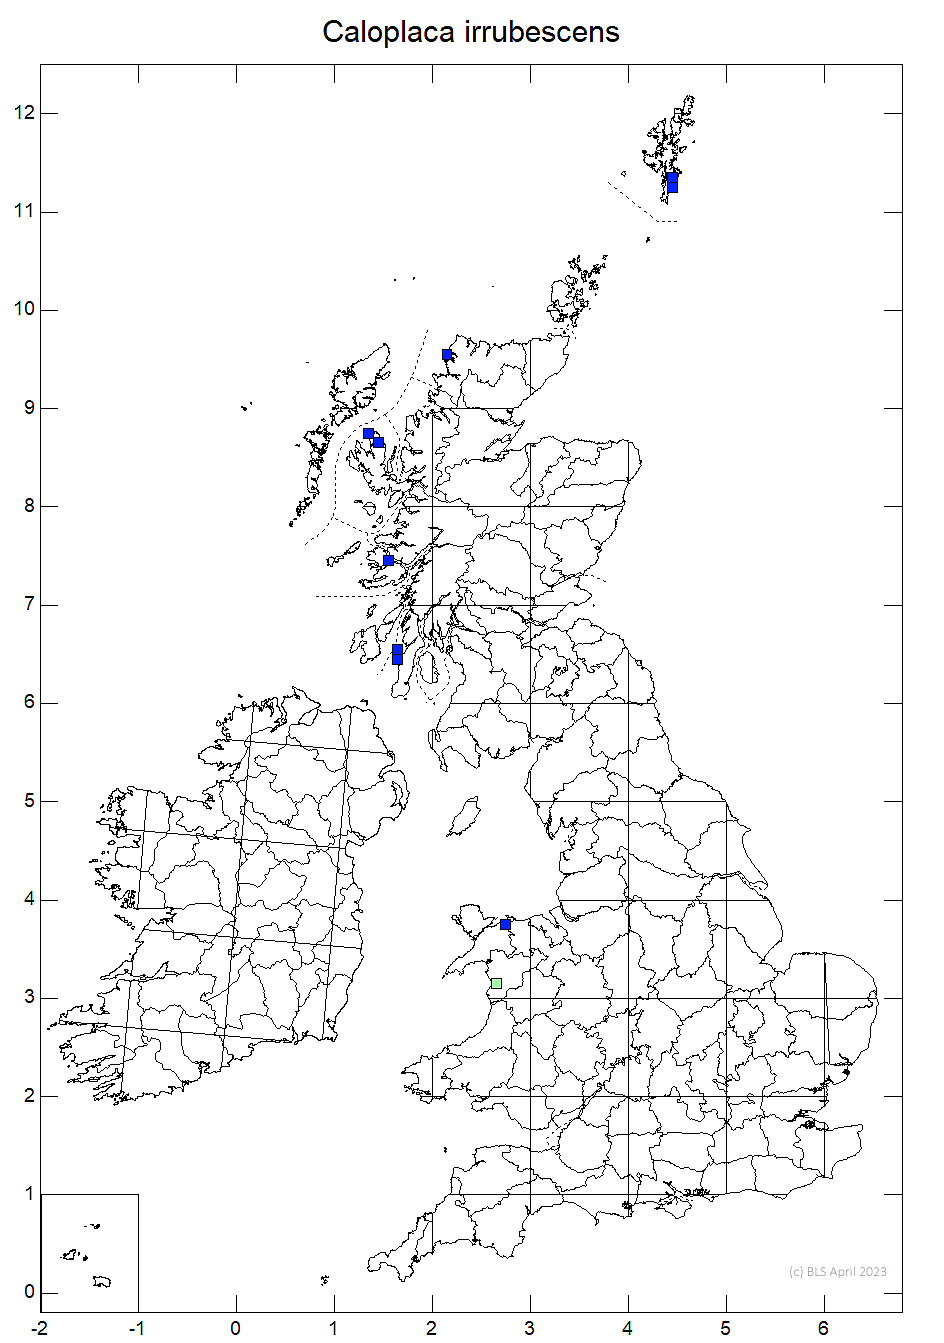 Caloplaca irrubescens 10km sq distribution map